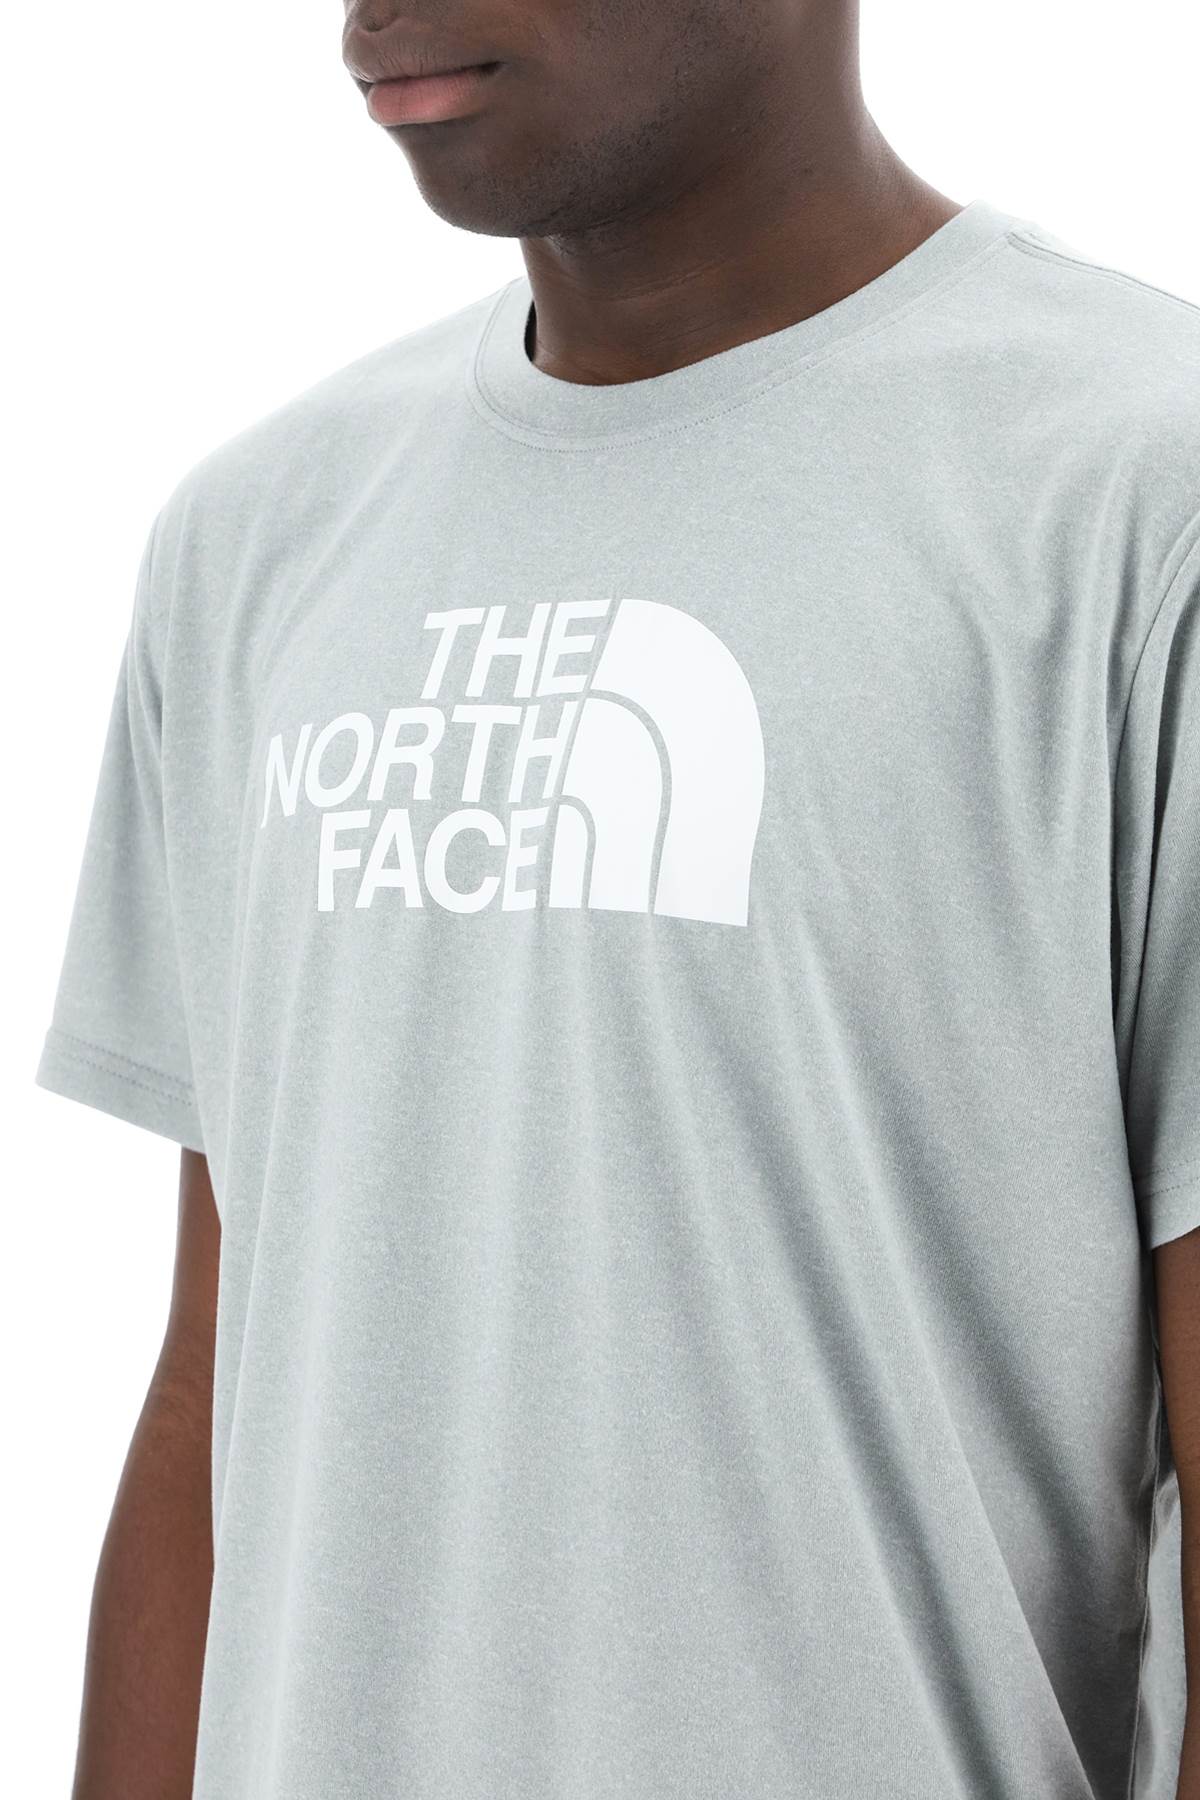 The north face care

easy care reax-3